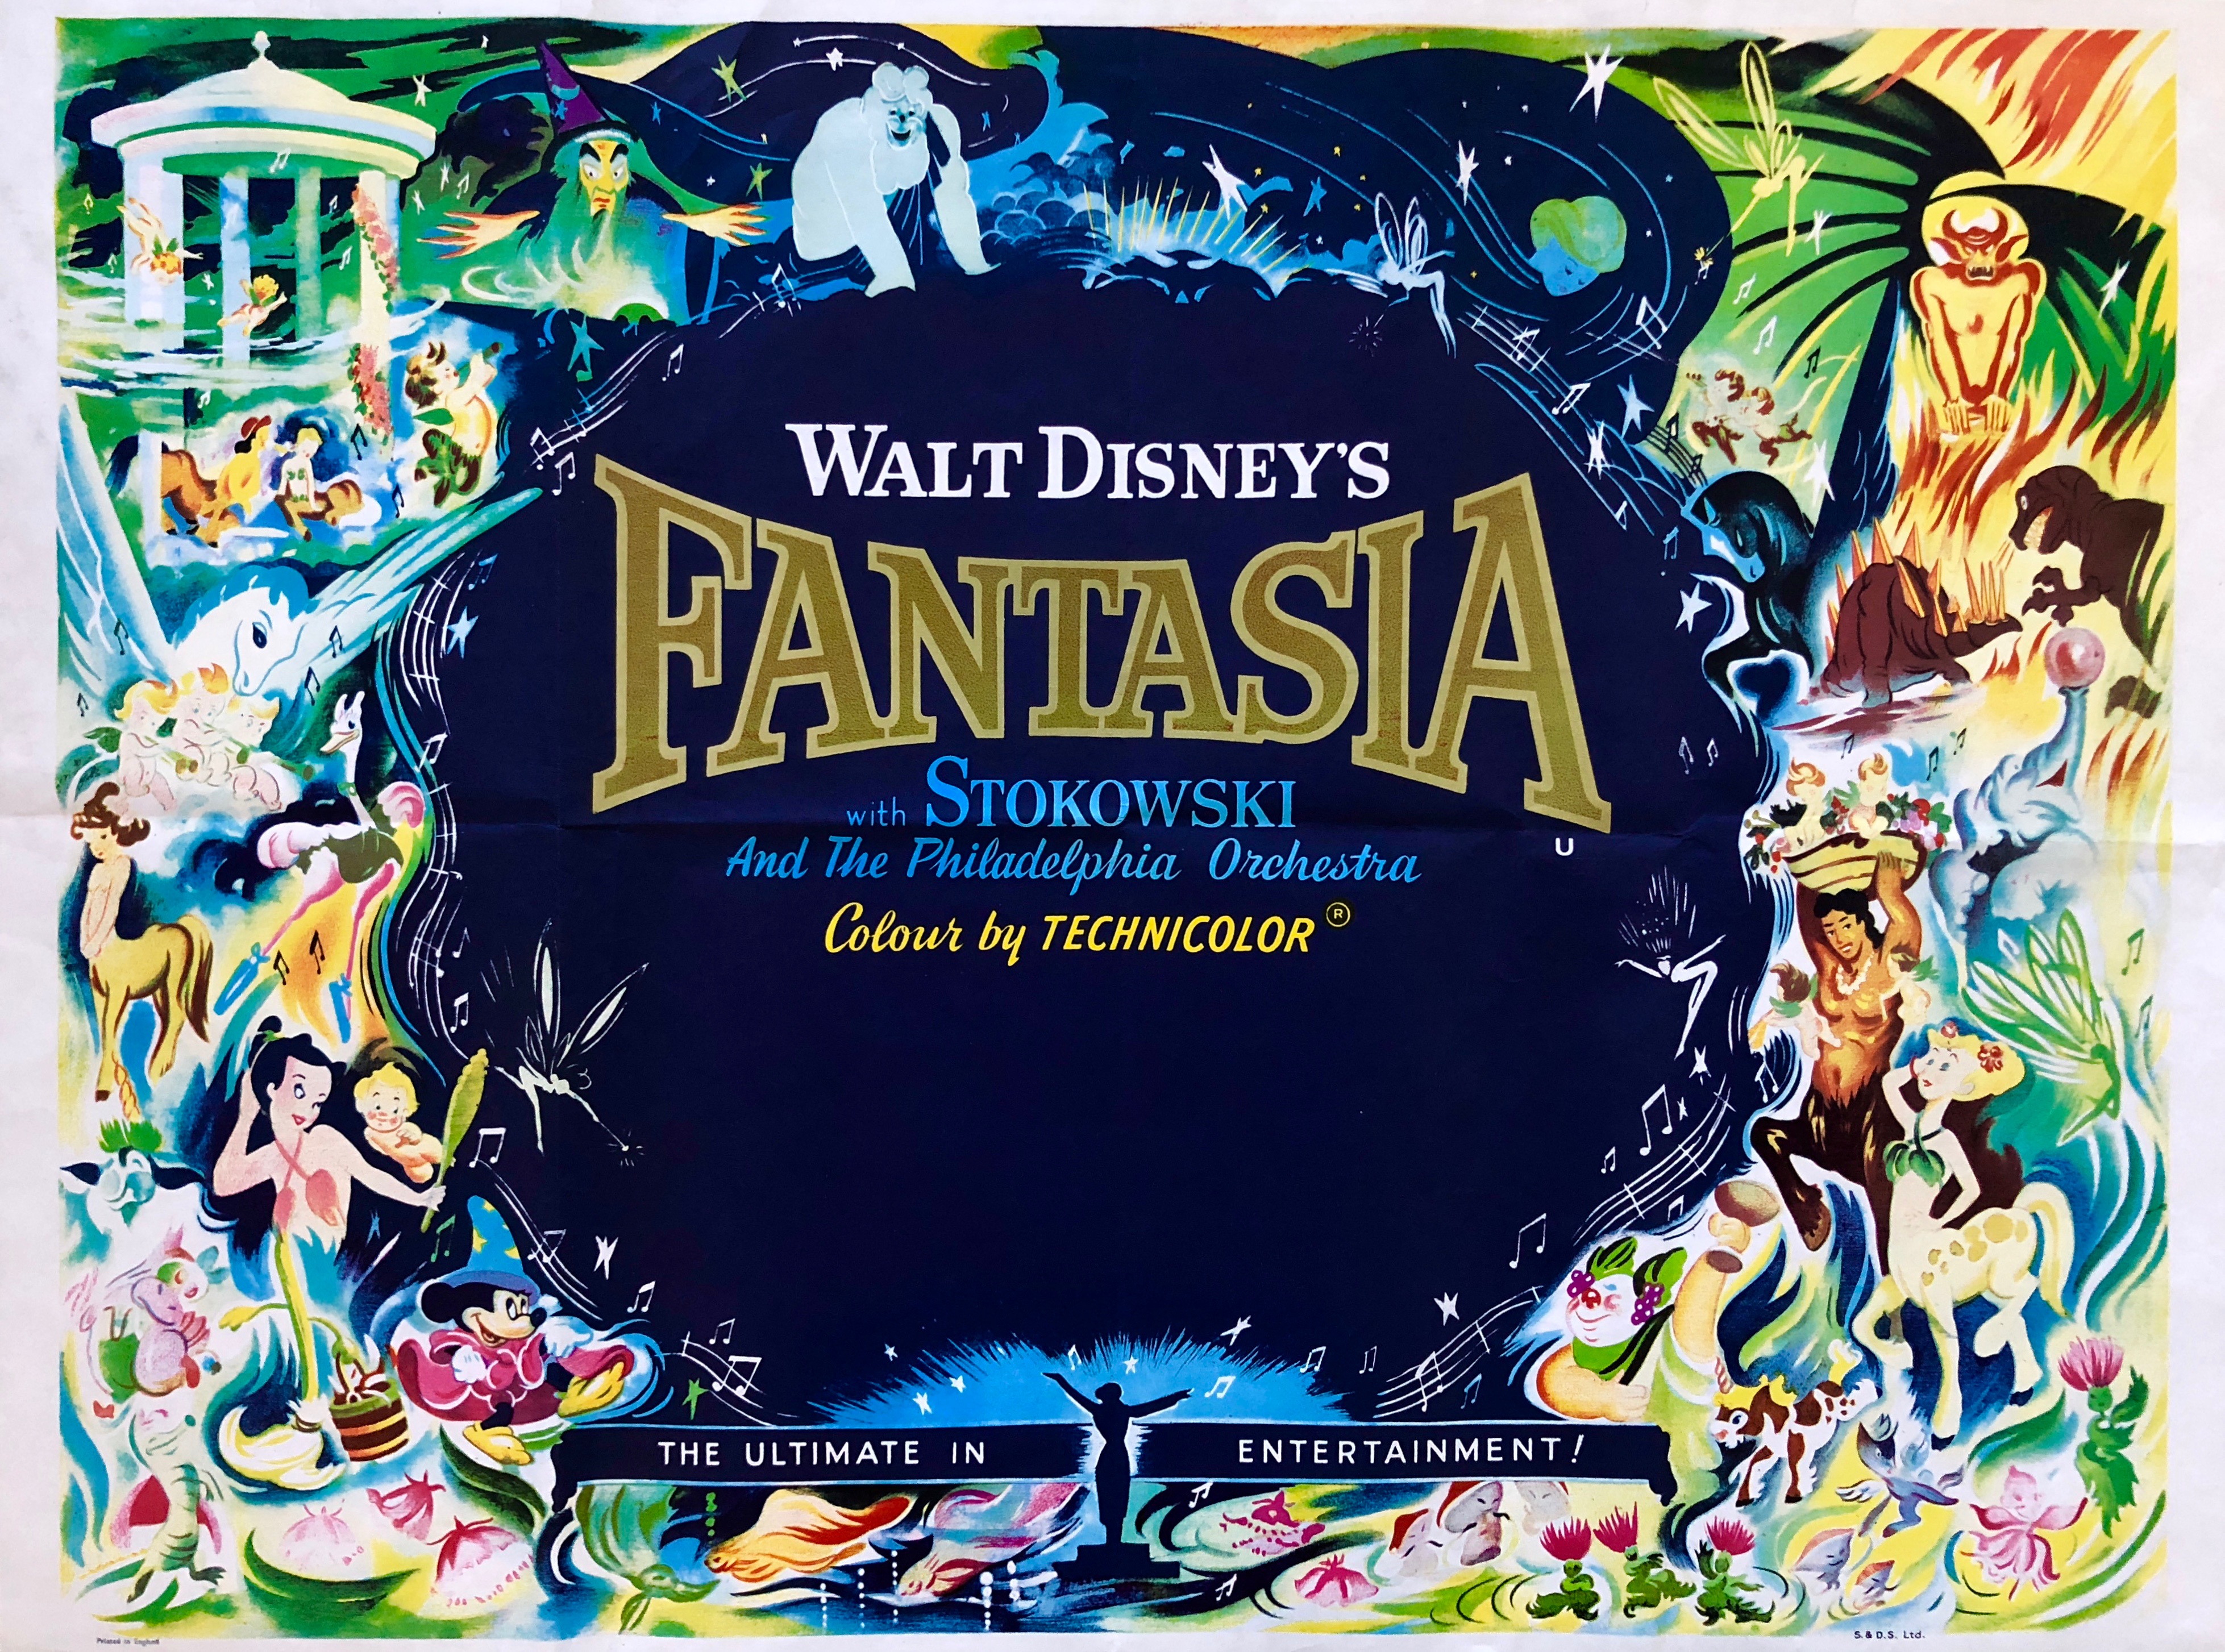 Original FANTASIA Movie Poster - Walt Disney - Mickey Mouse - Musical